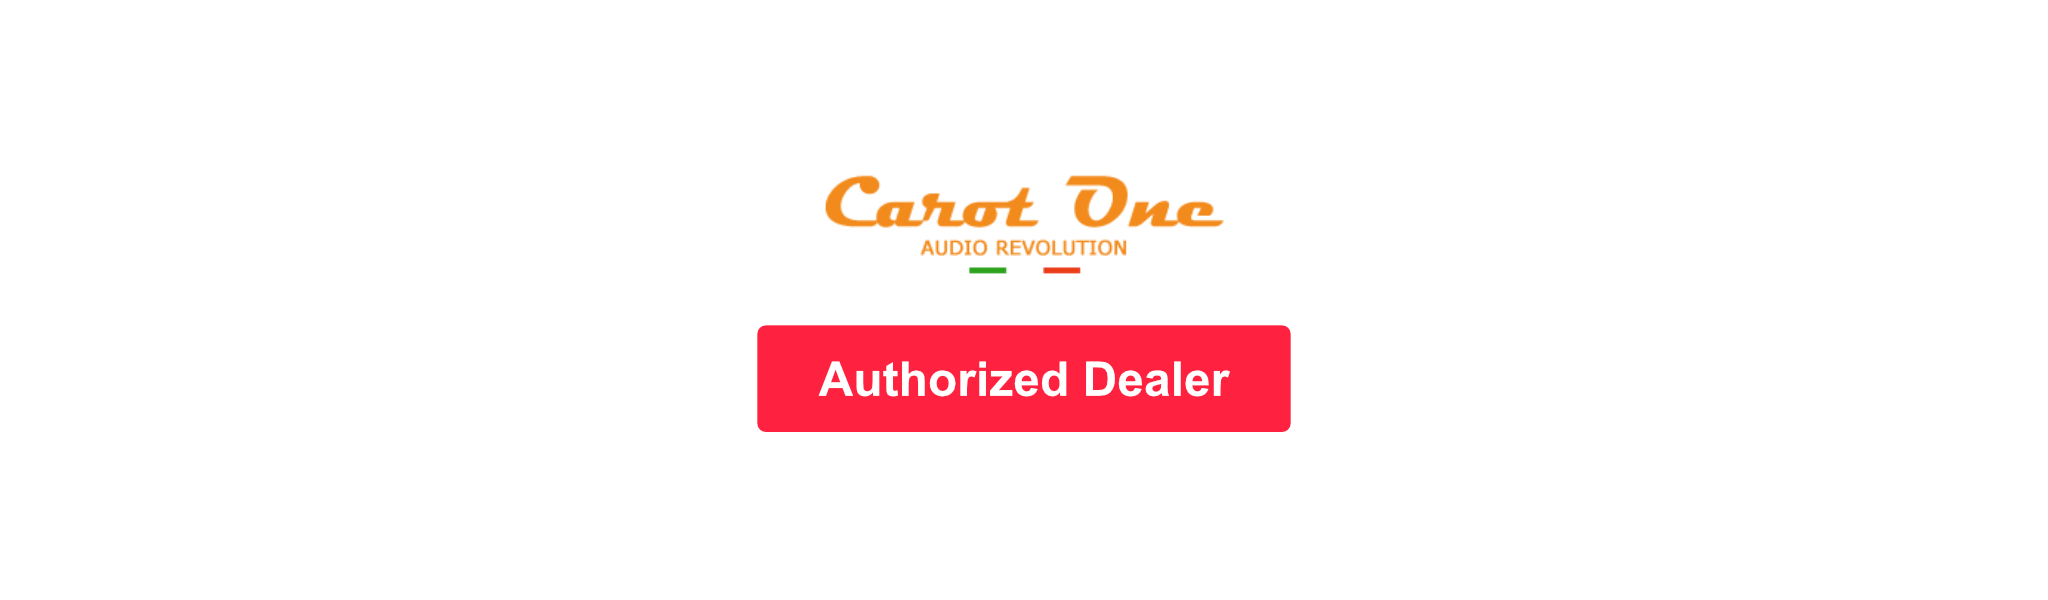 Carot One authorised dealer